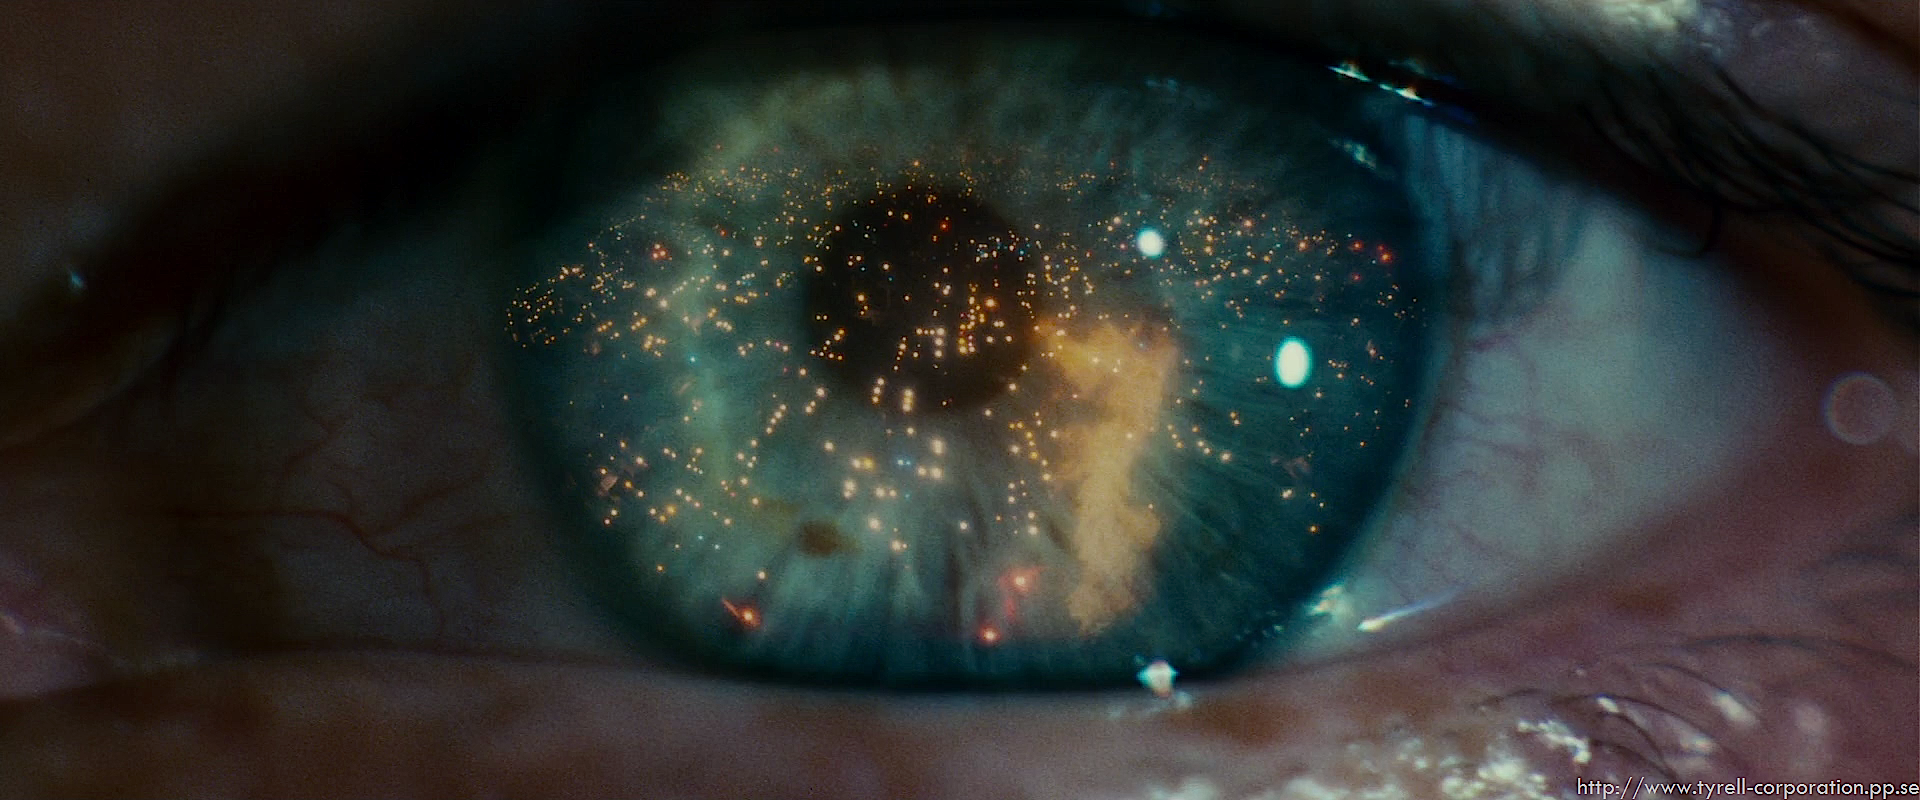 General 1920x800 movies science fiction eyes Blade Runner closeup film stills